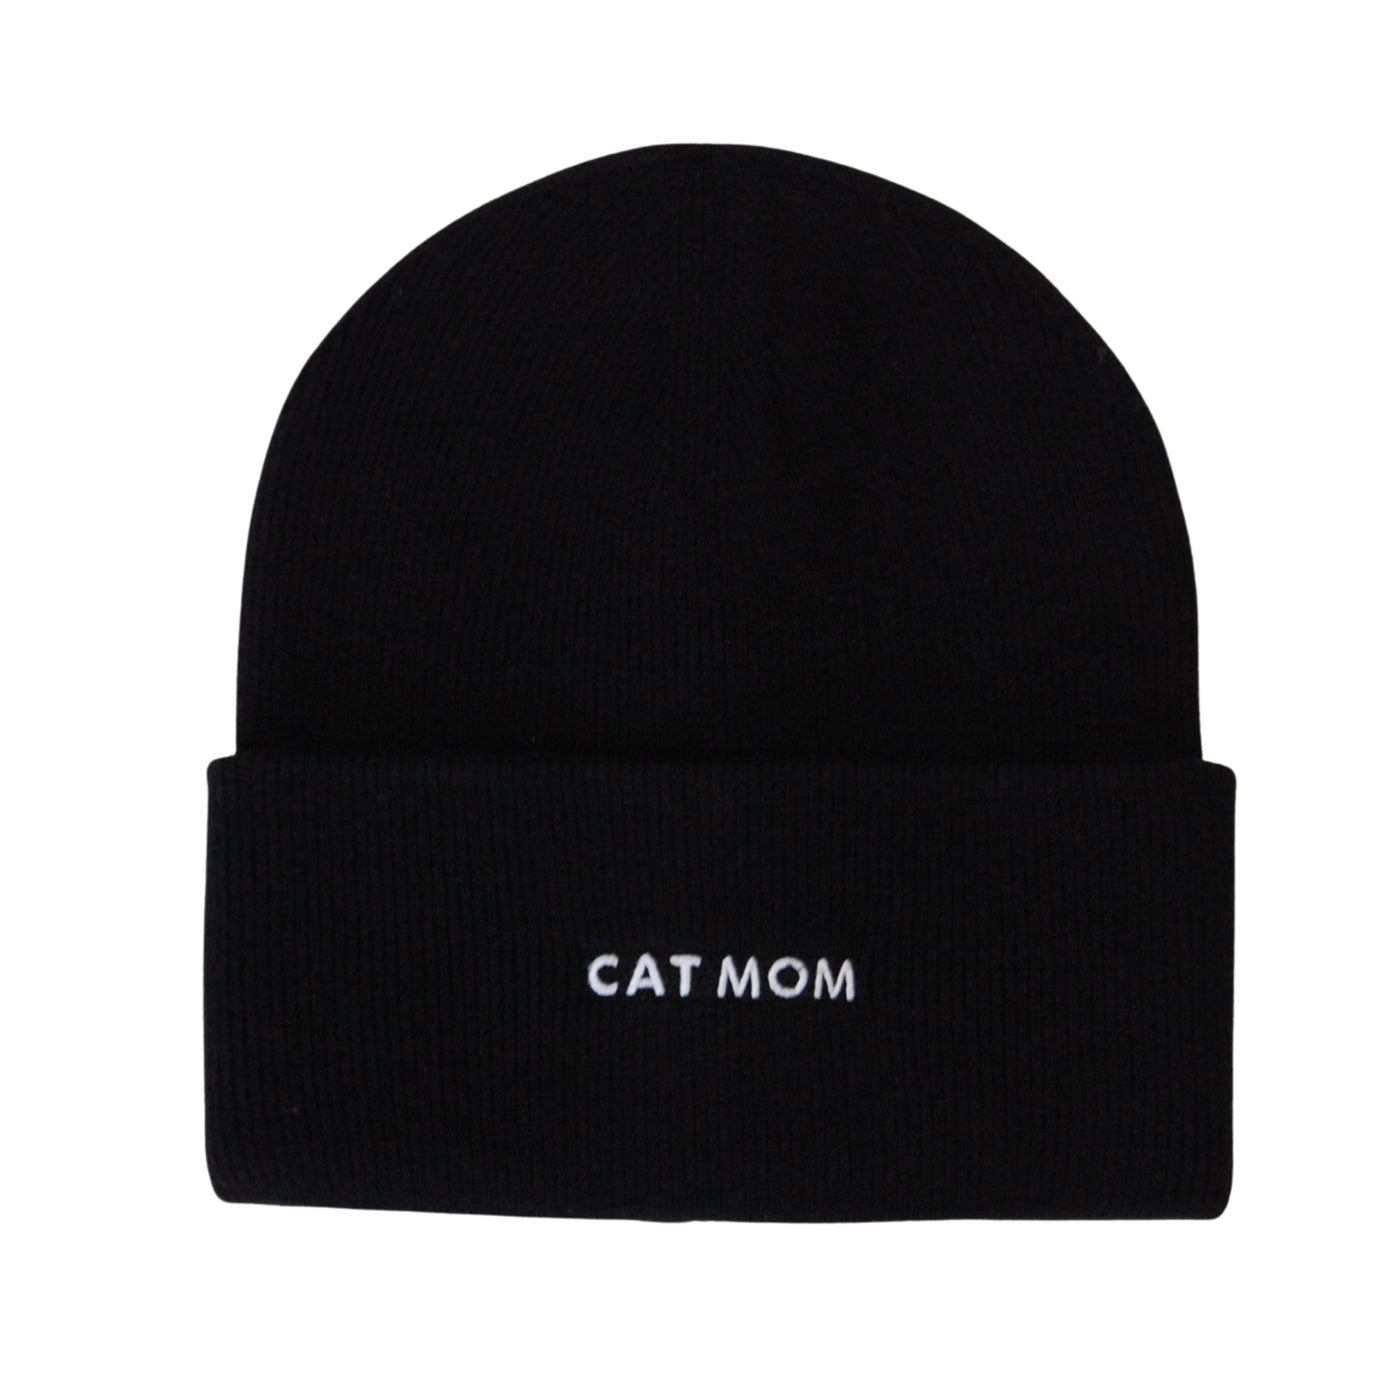 Hatphile Cat Mom Embroidery Beanie Toque